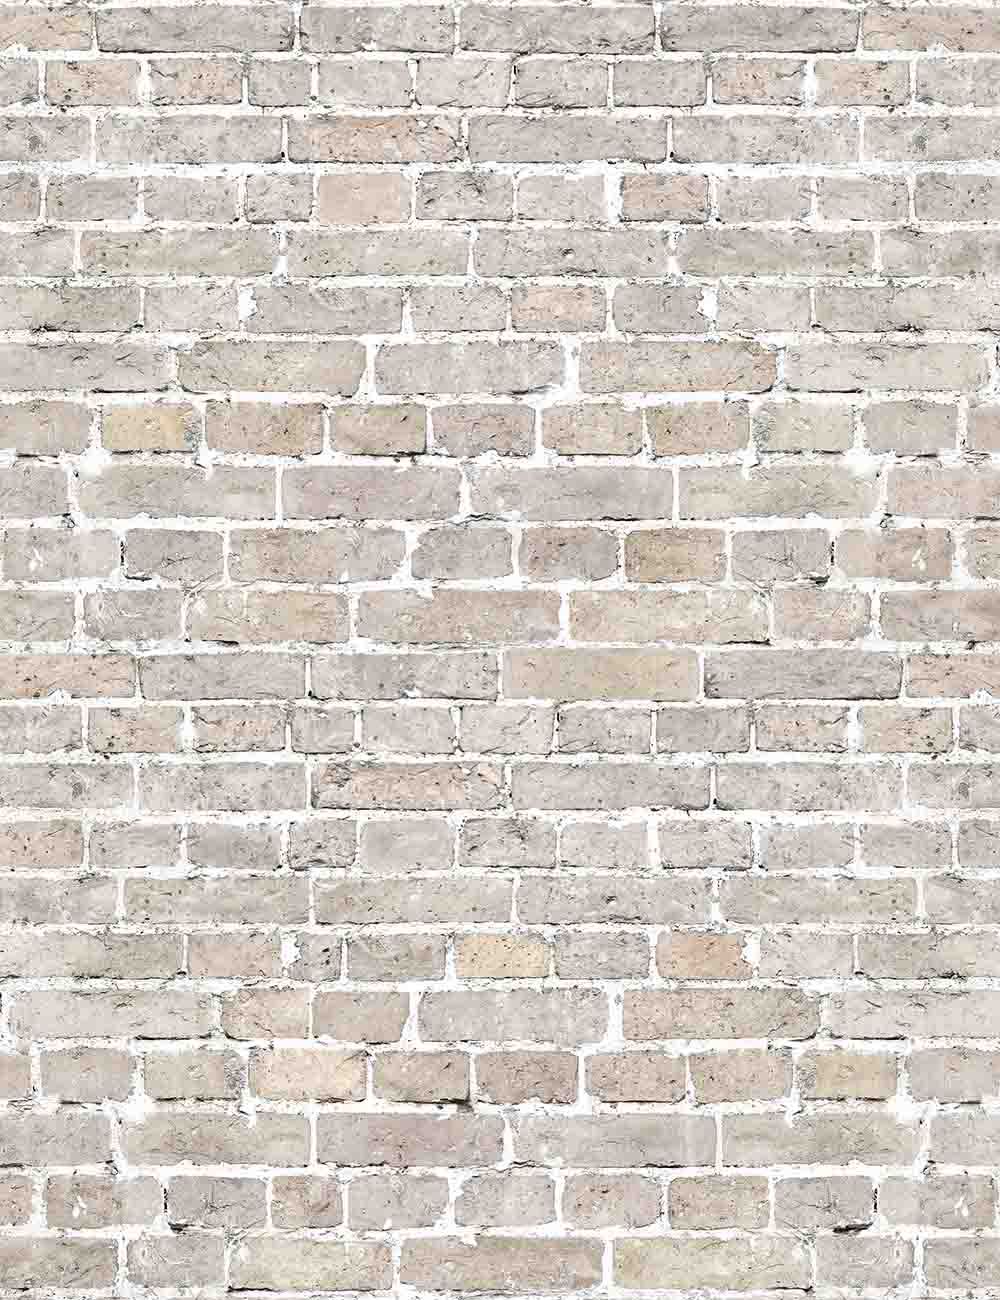 Retro Cornsilk Brick Wall Texture Backdrop For Photography Shopbackdrop